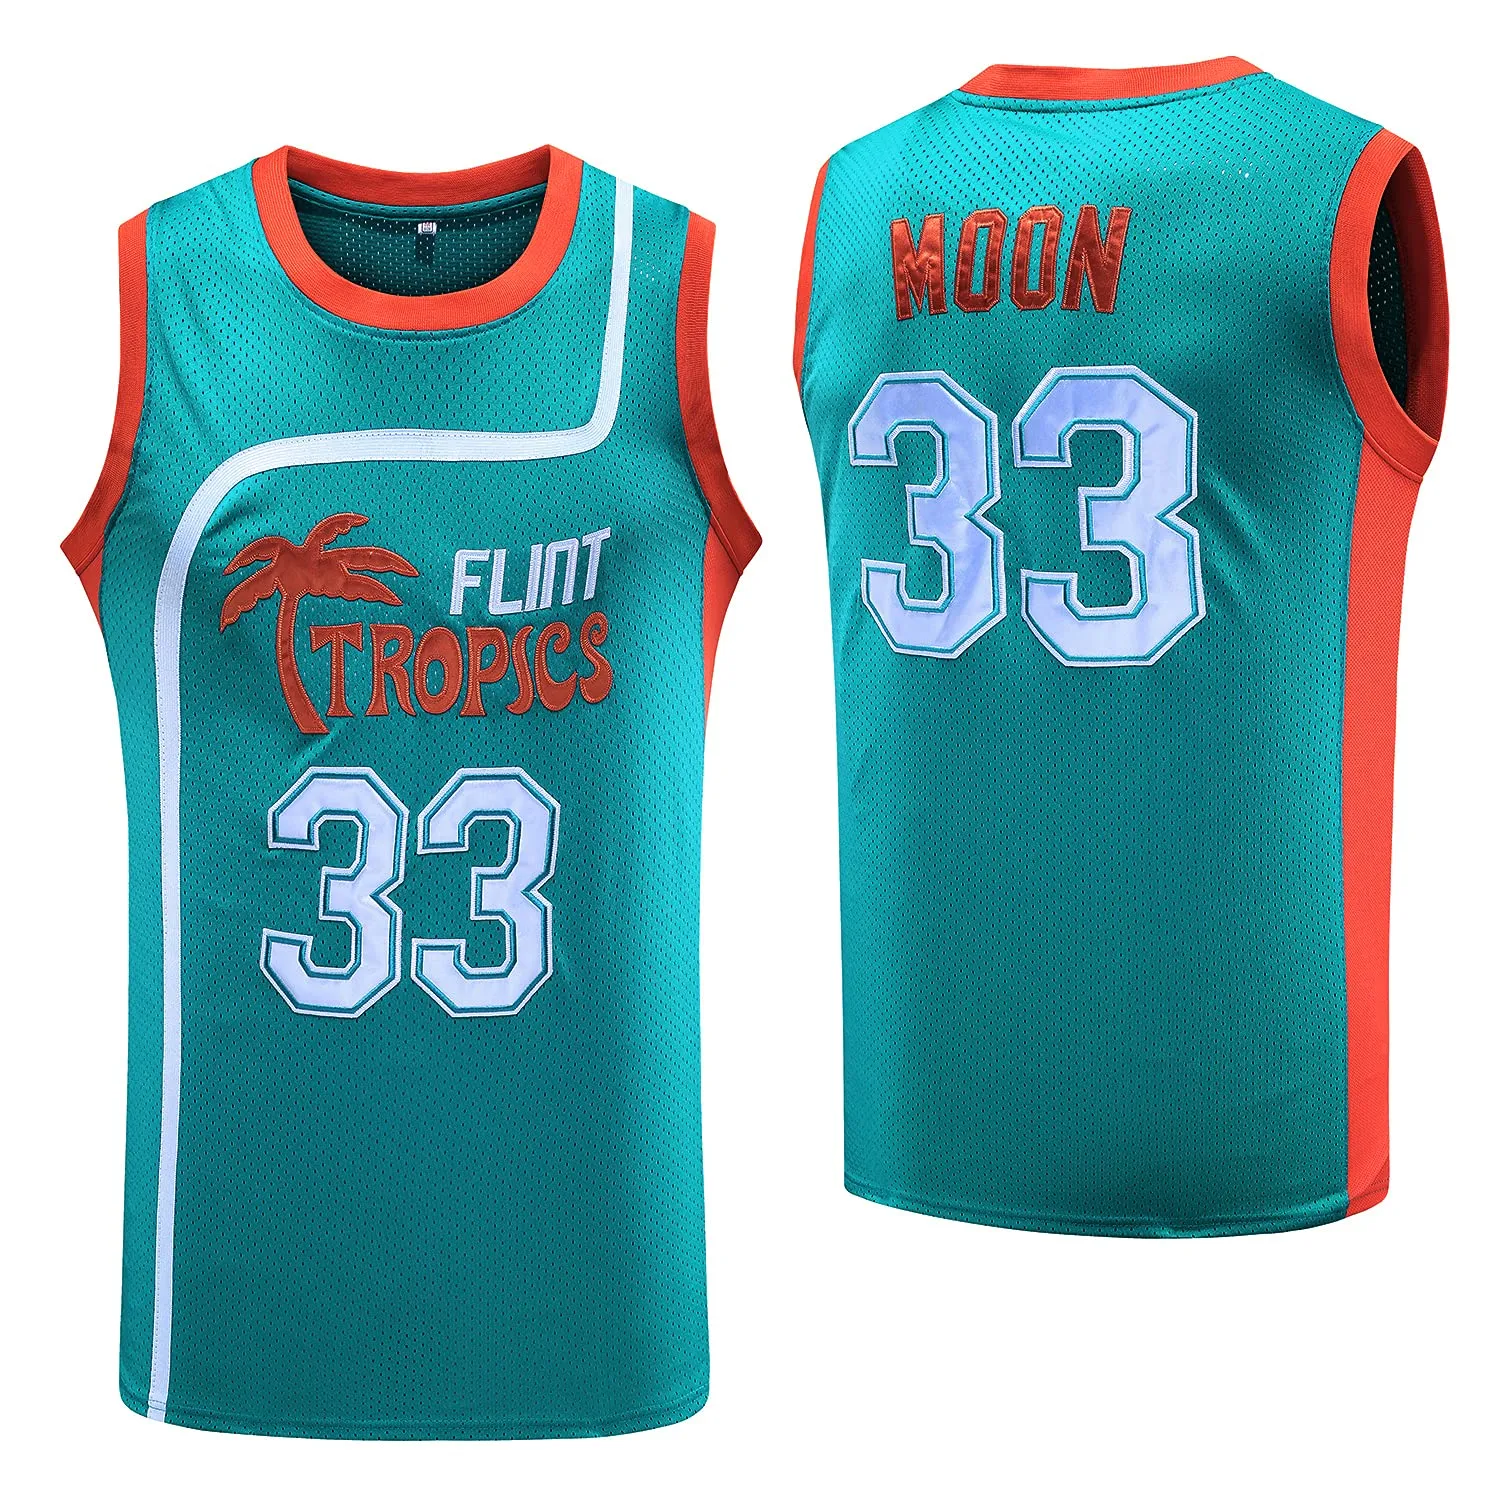 Maglie da basket cinematografica Nuova nave da noi Jackie Moon 33 Basketball Jersey Flint Tropics Semi Pro Movie Men All Cucited S-3XL di alta qualità